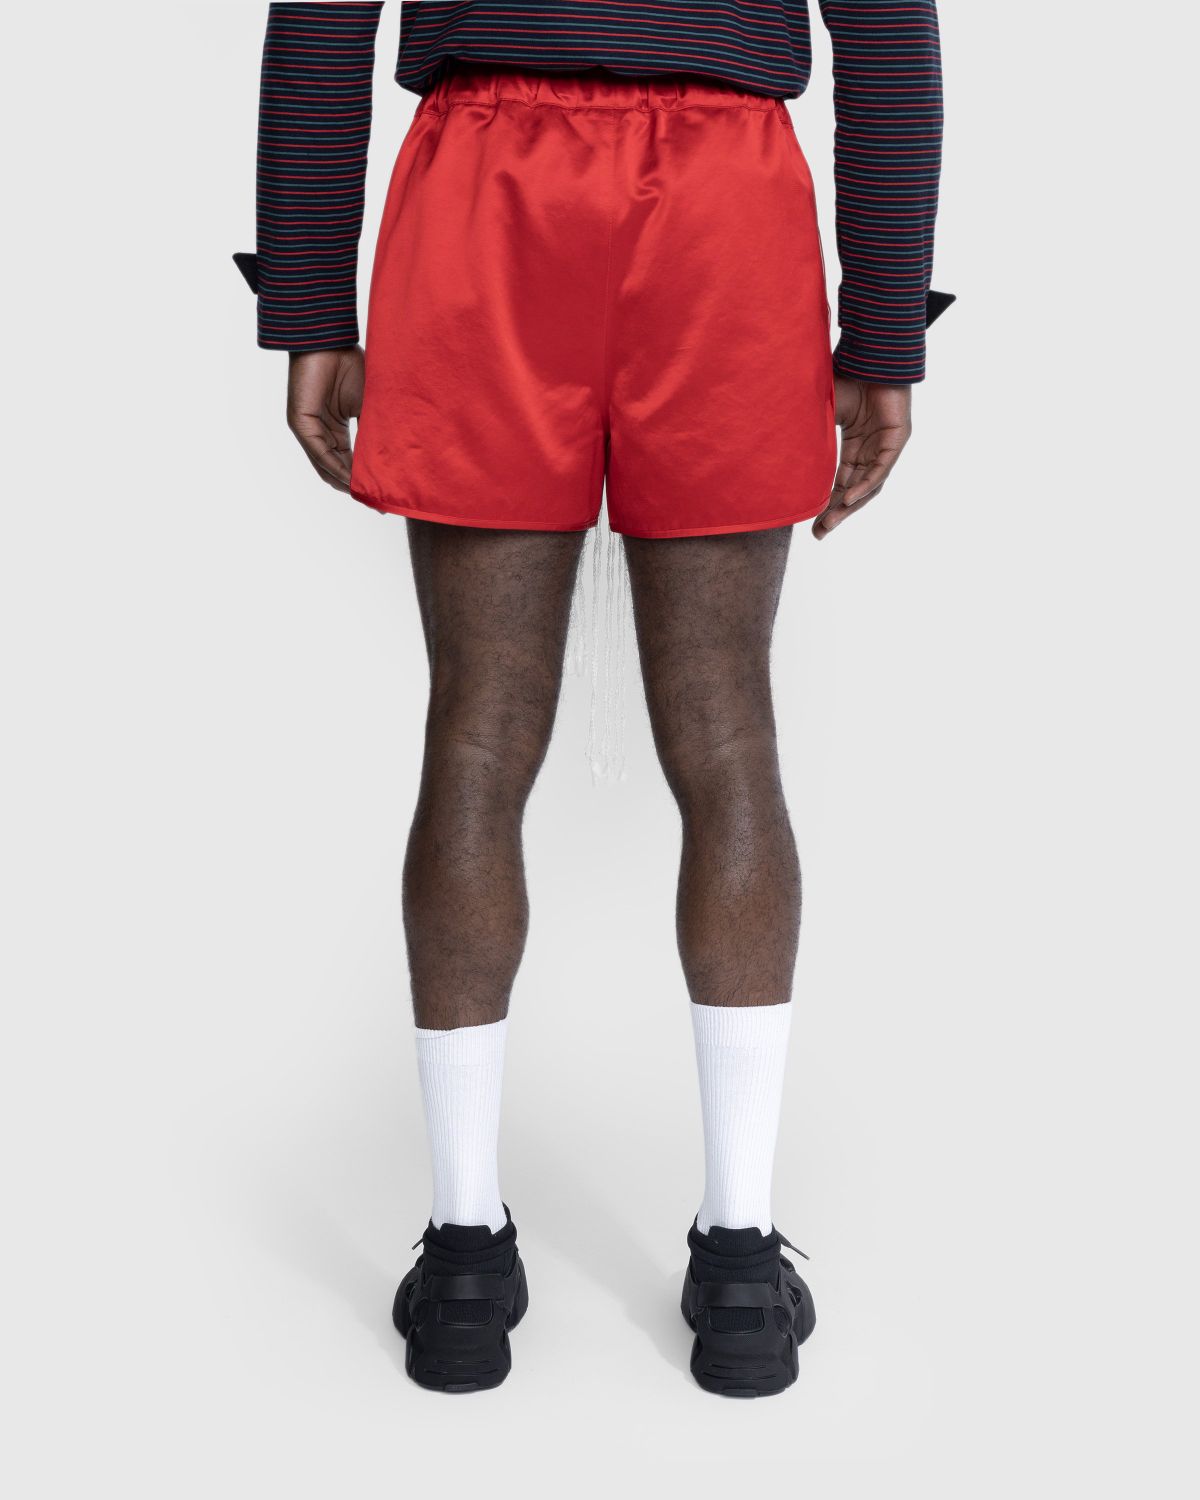 Wales Bonner – Cassette Shorts - Shorts - Red - Image 3